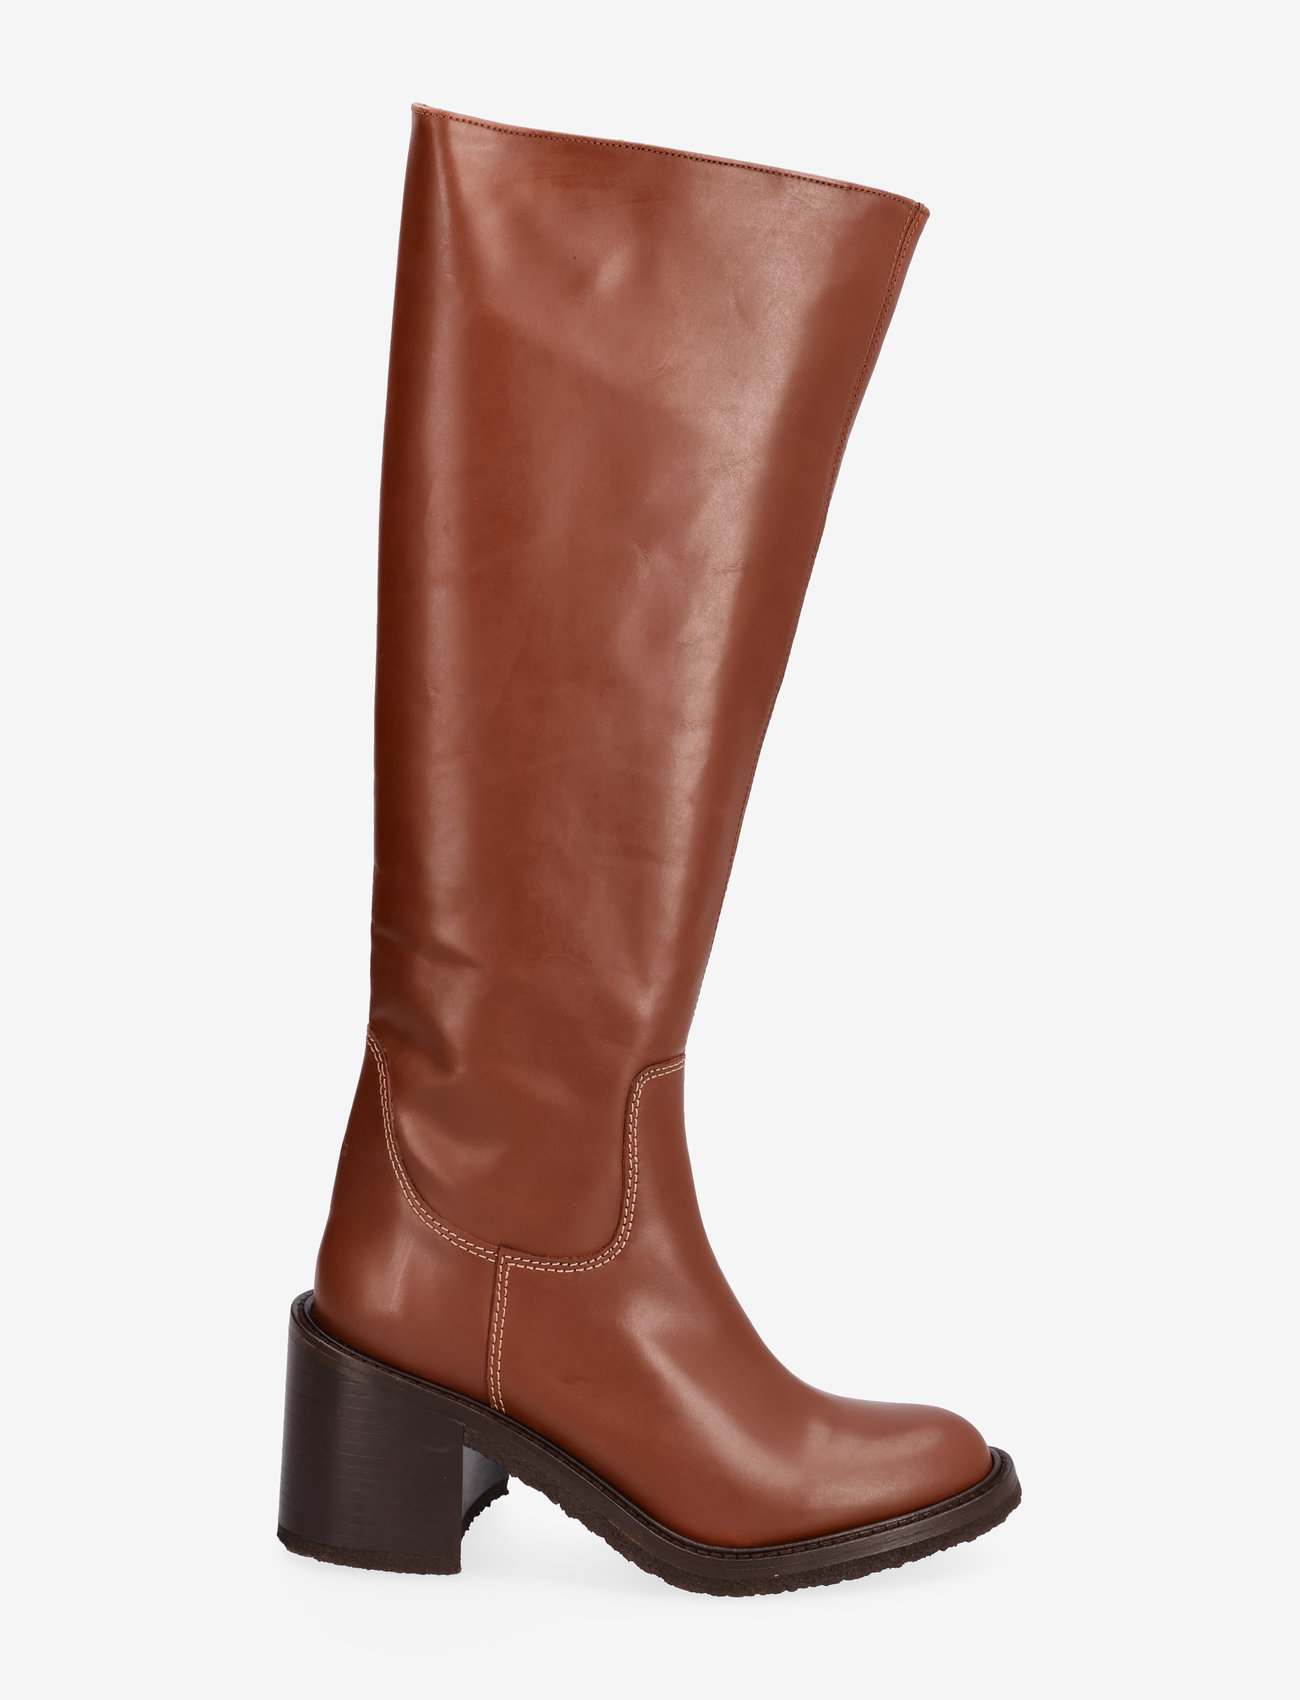 ANGULUS - Boots - Block heel - kniehohe stiefel - 1705 terracotta - 1